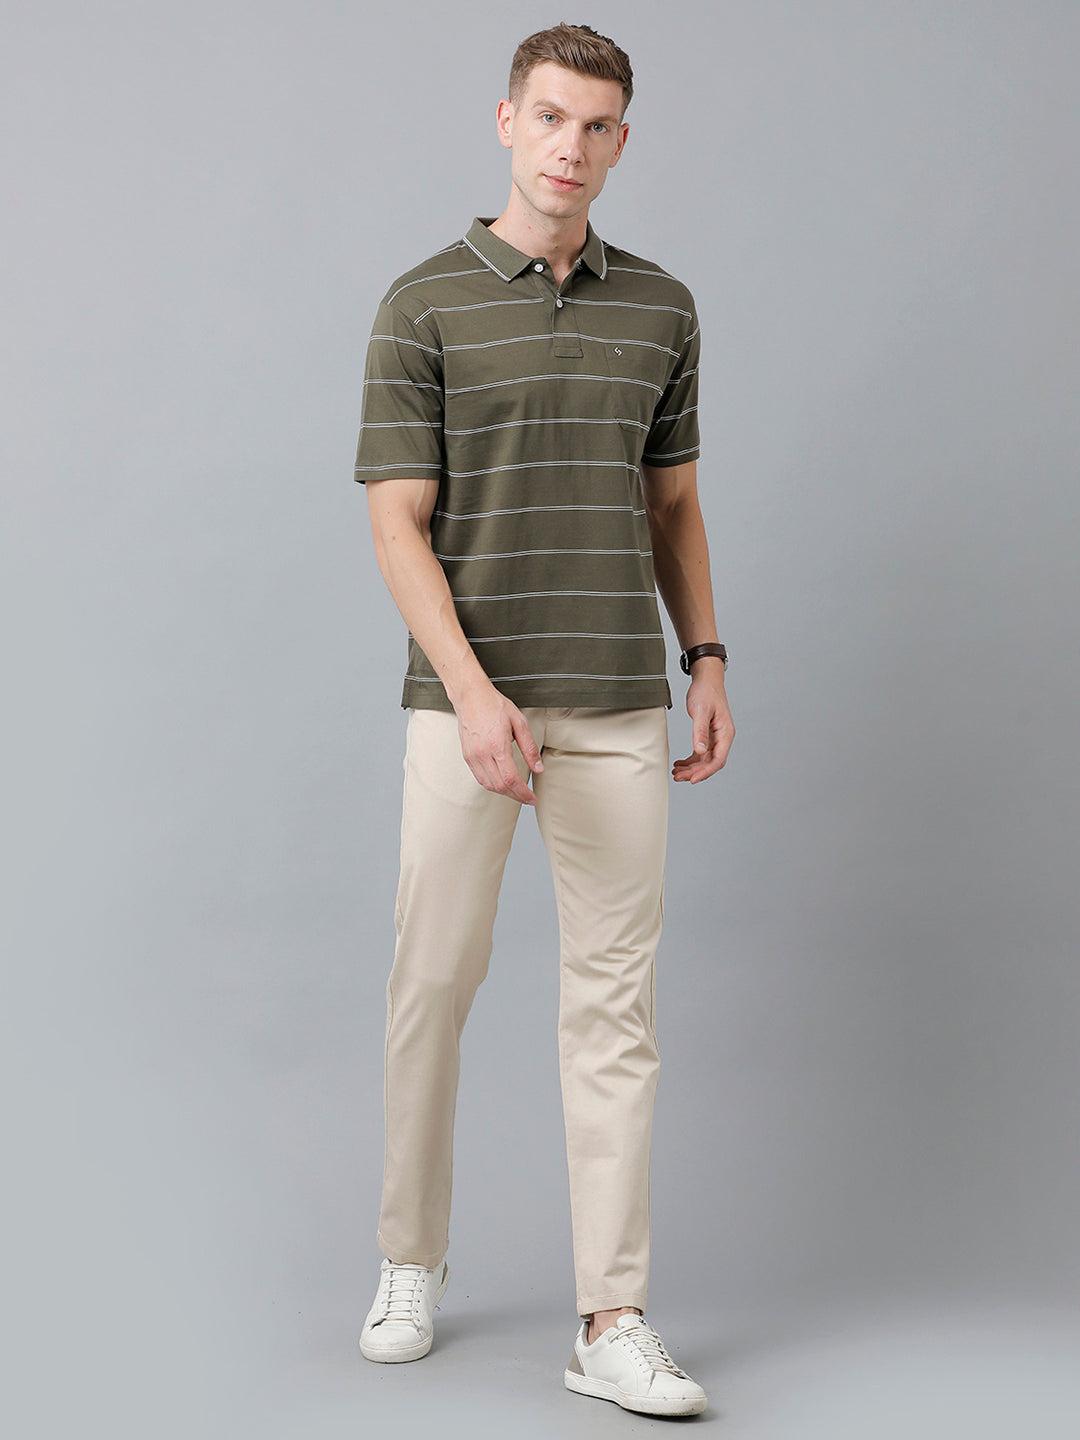 Classic Polo Men's Cotton Half Sleeve Striped Authentic Fit Polo Neck Olive Color T-Shirt | Ap - 85 A